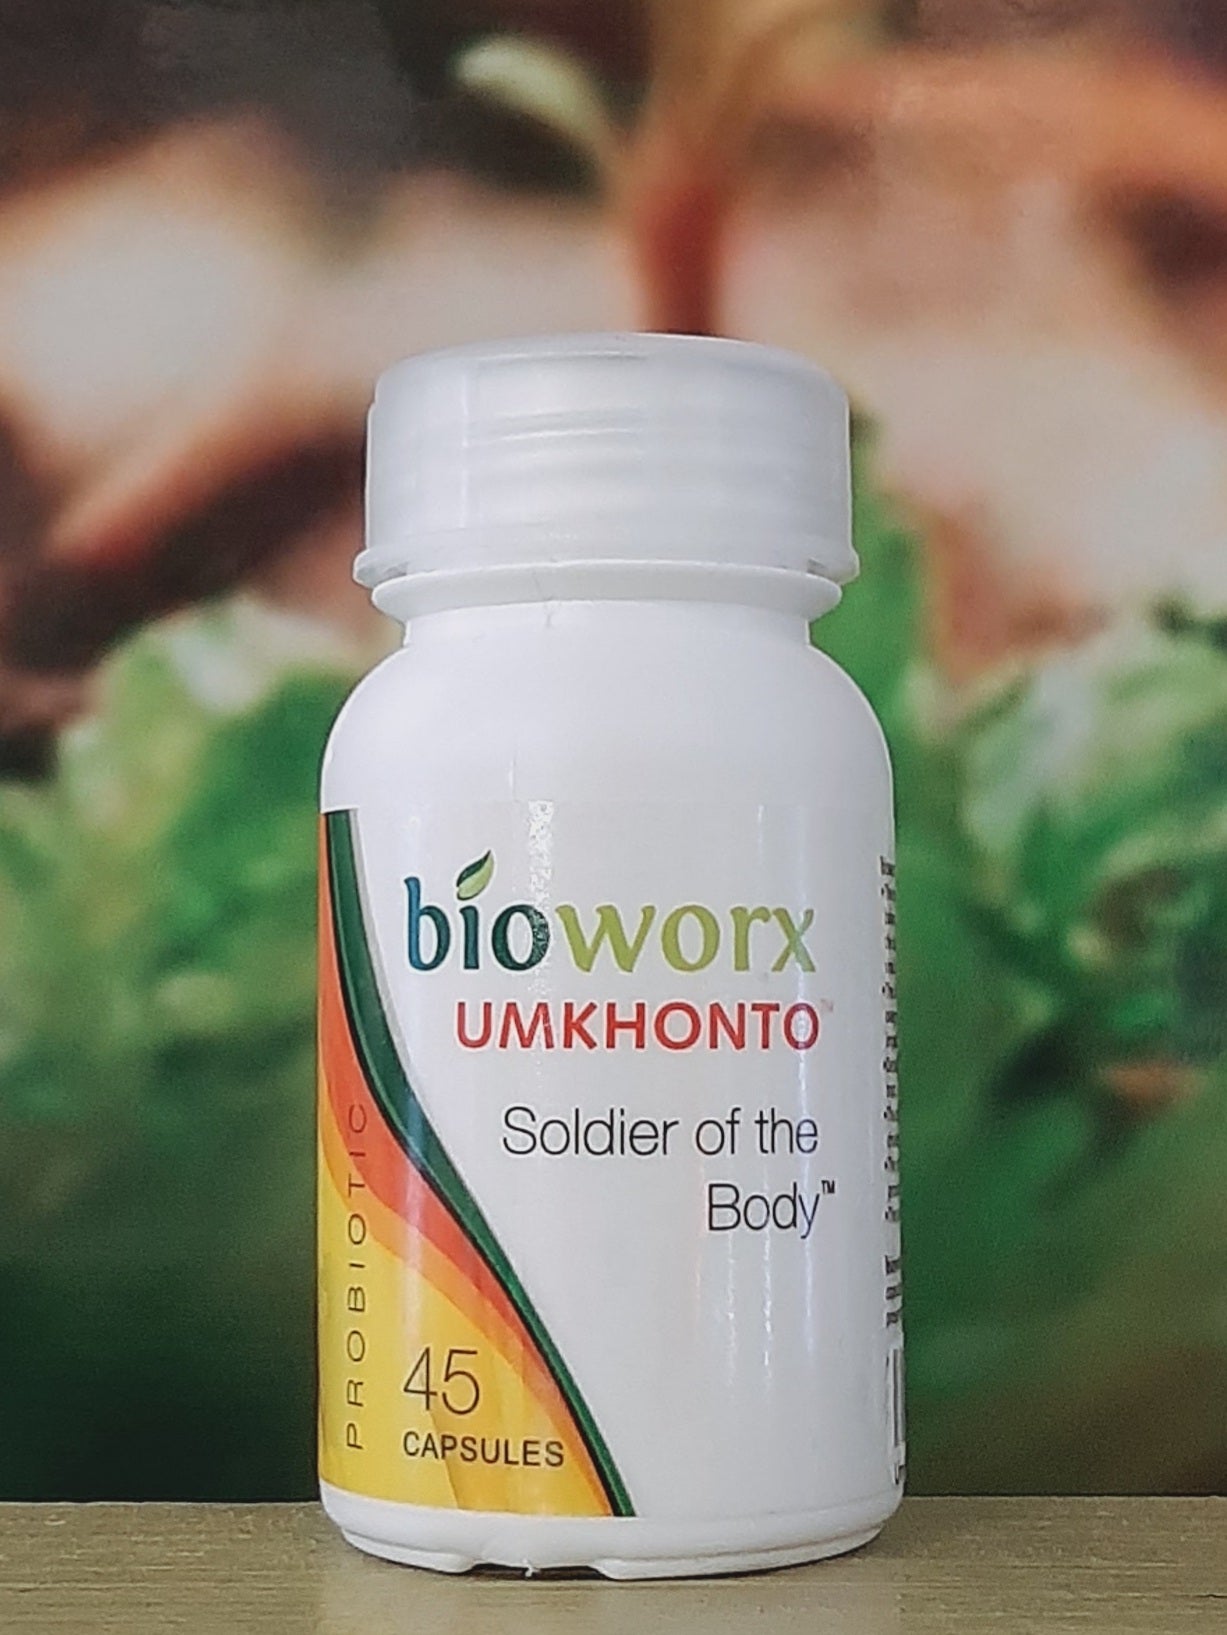 Bioworx Umkhonto 45 capsules